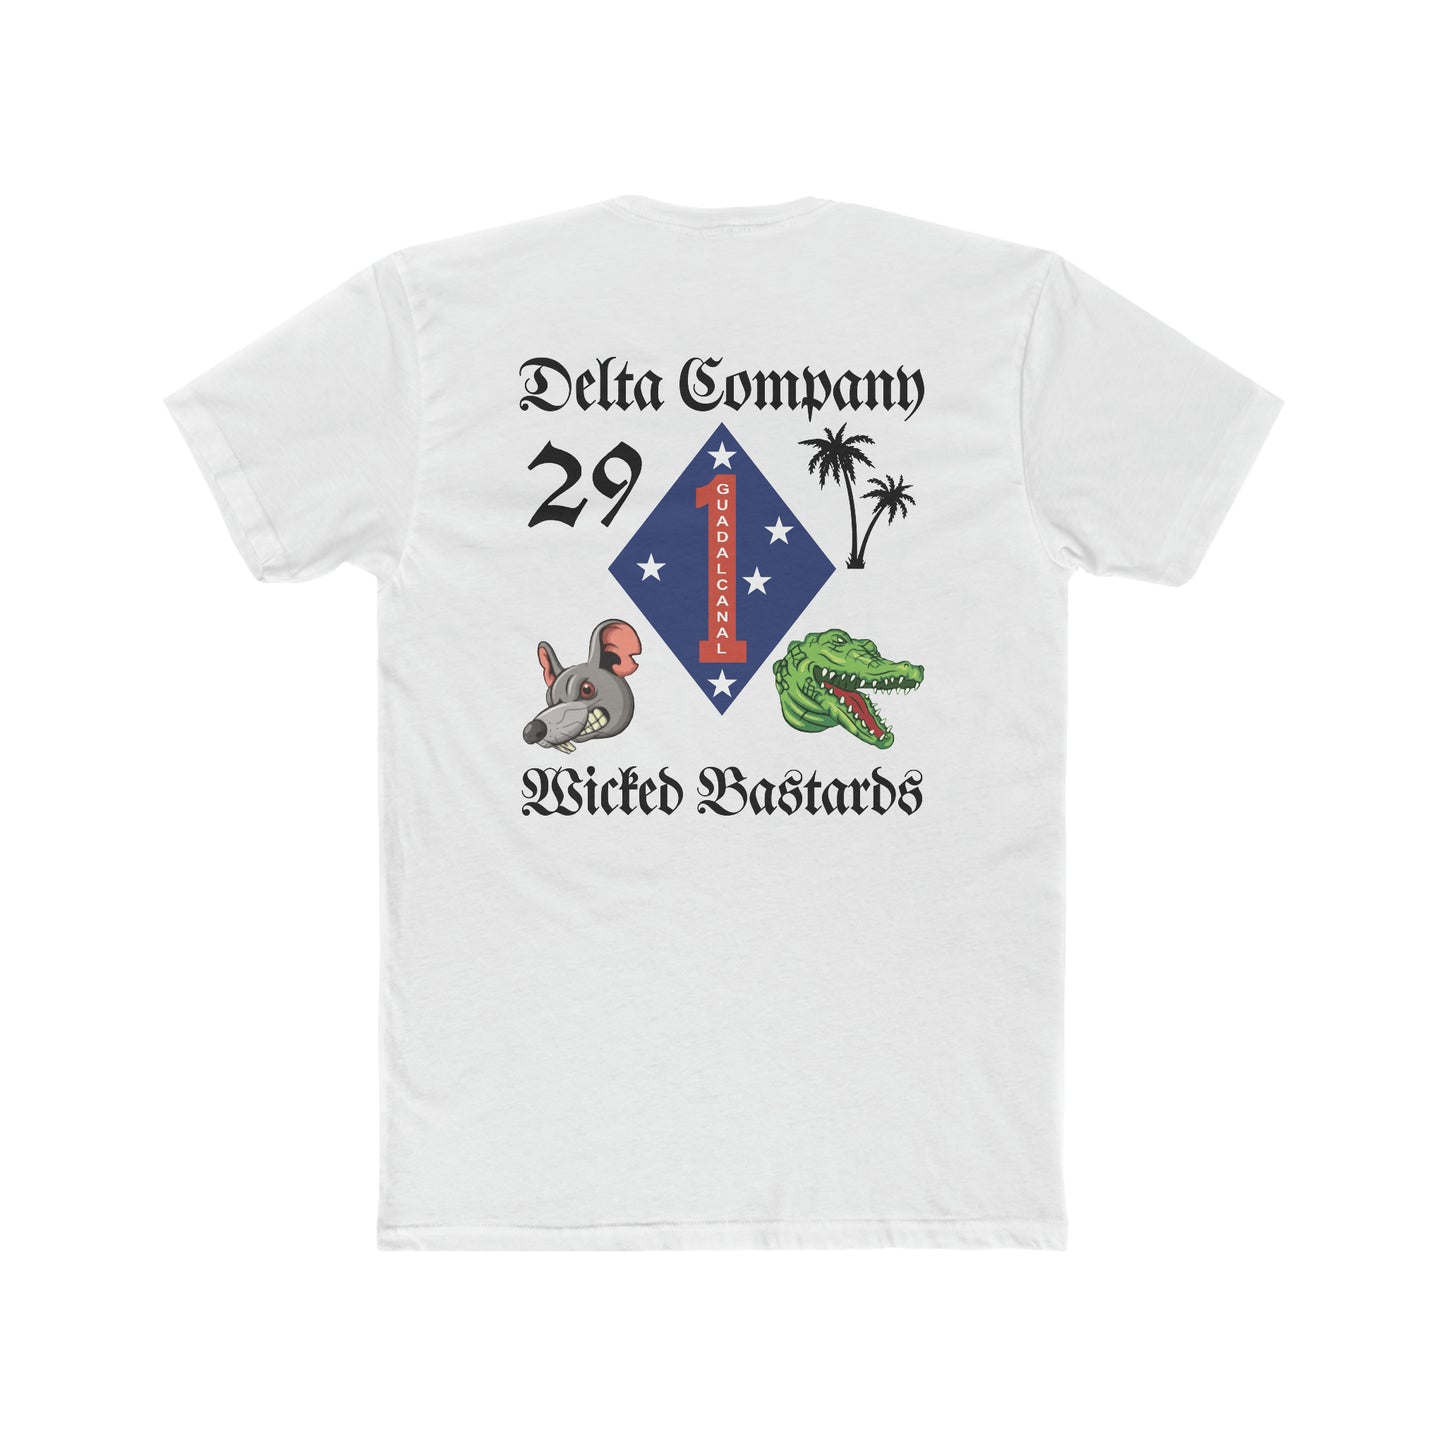 Delta Co 3d Amphibian Assault Battalion Tee